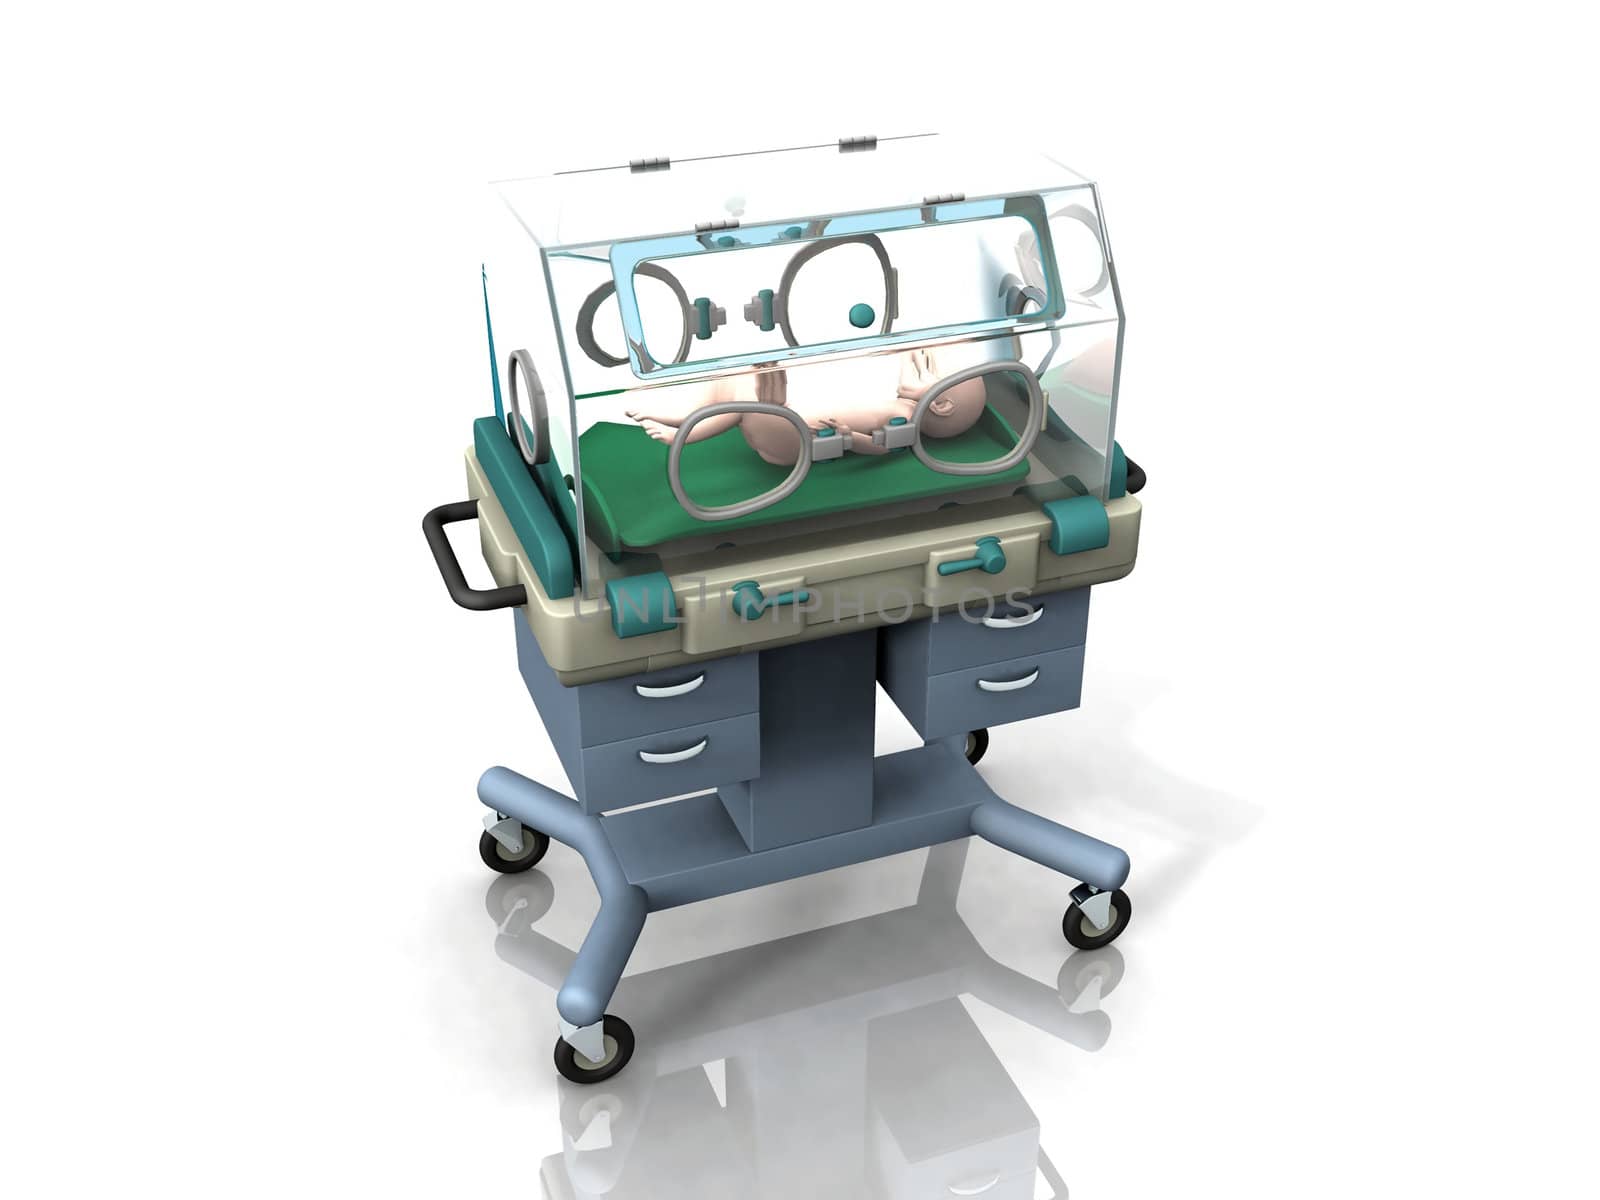 the baby incubator